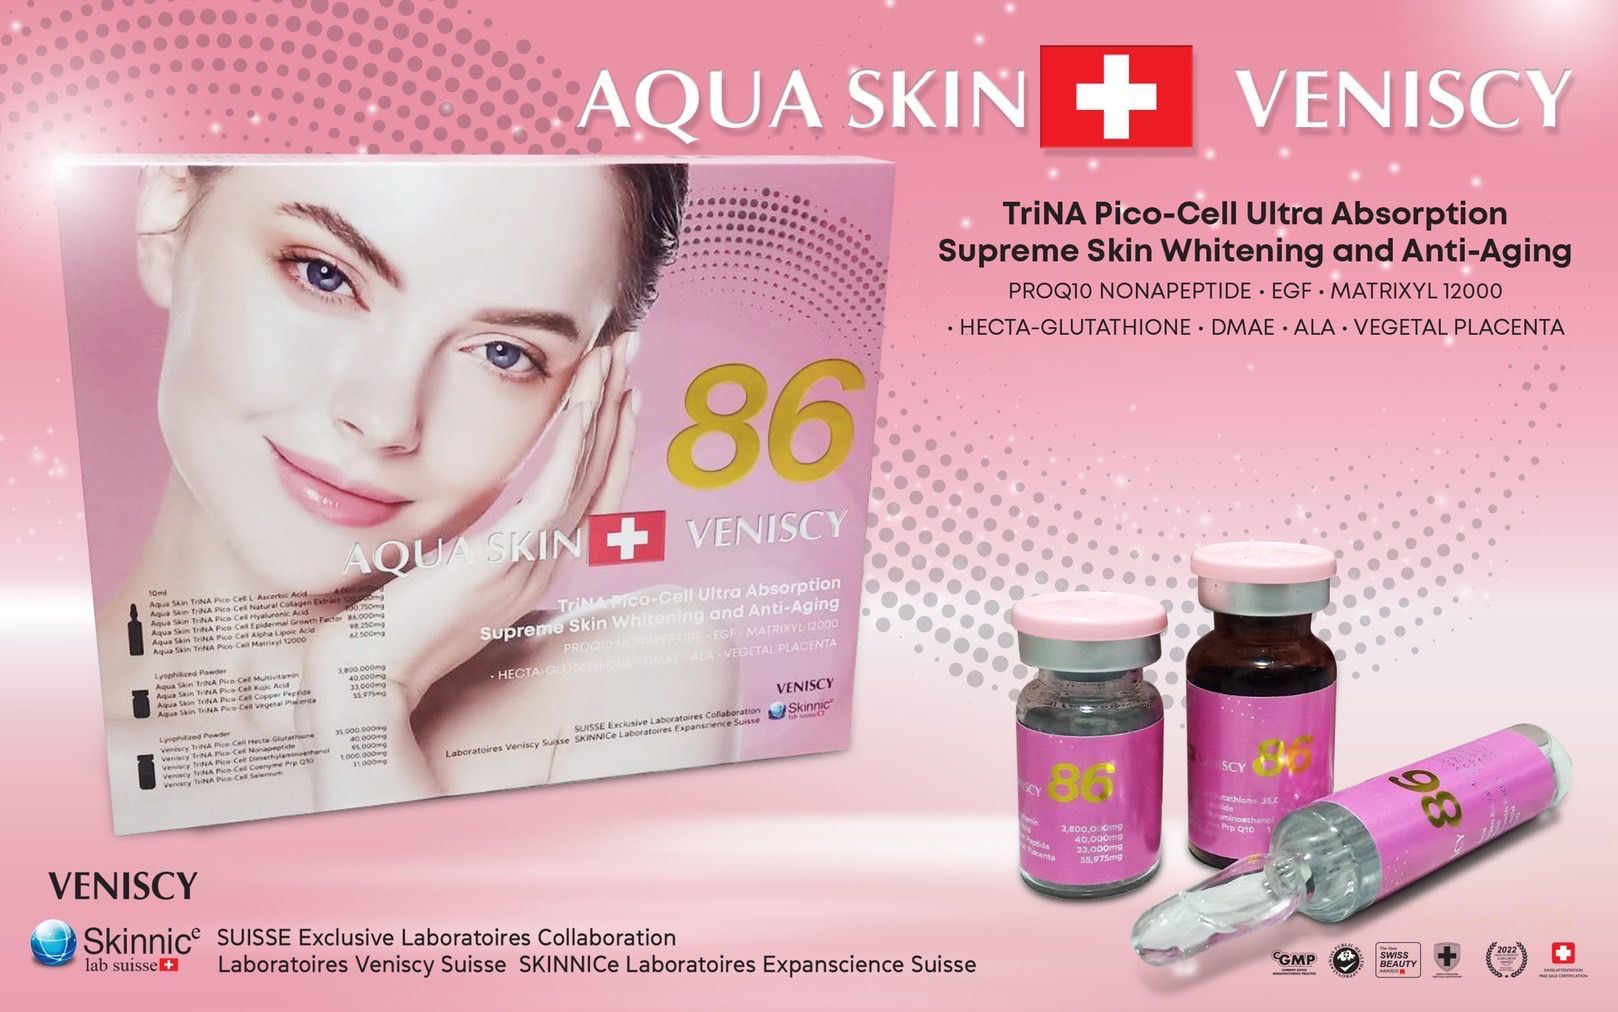 Aqua Skin Veniscy 86 TriNA Pico-Cell Ultra Absorption Glutathione Skin Whitening Injection - Healthcarebeauty